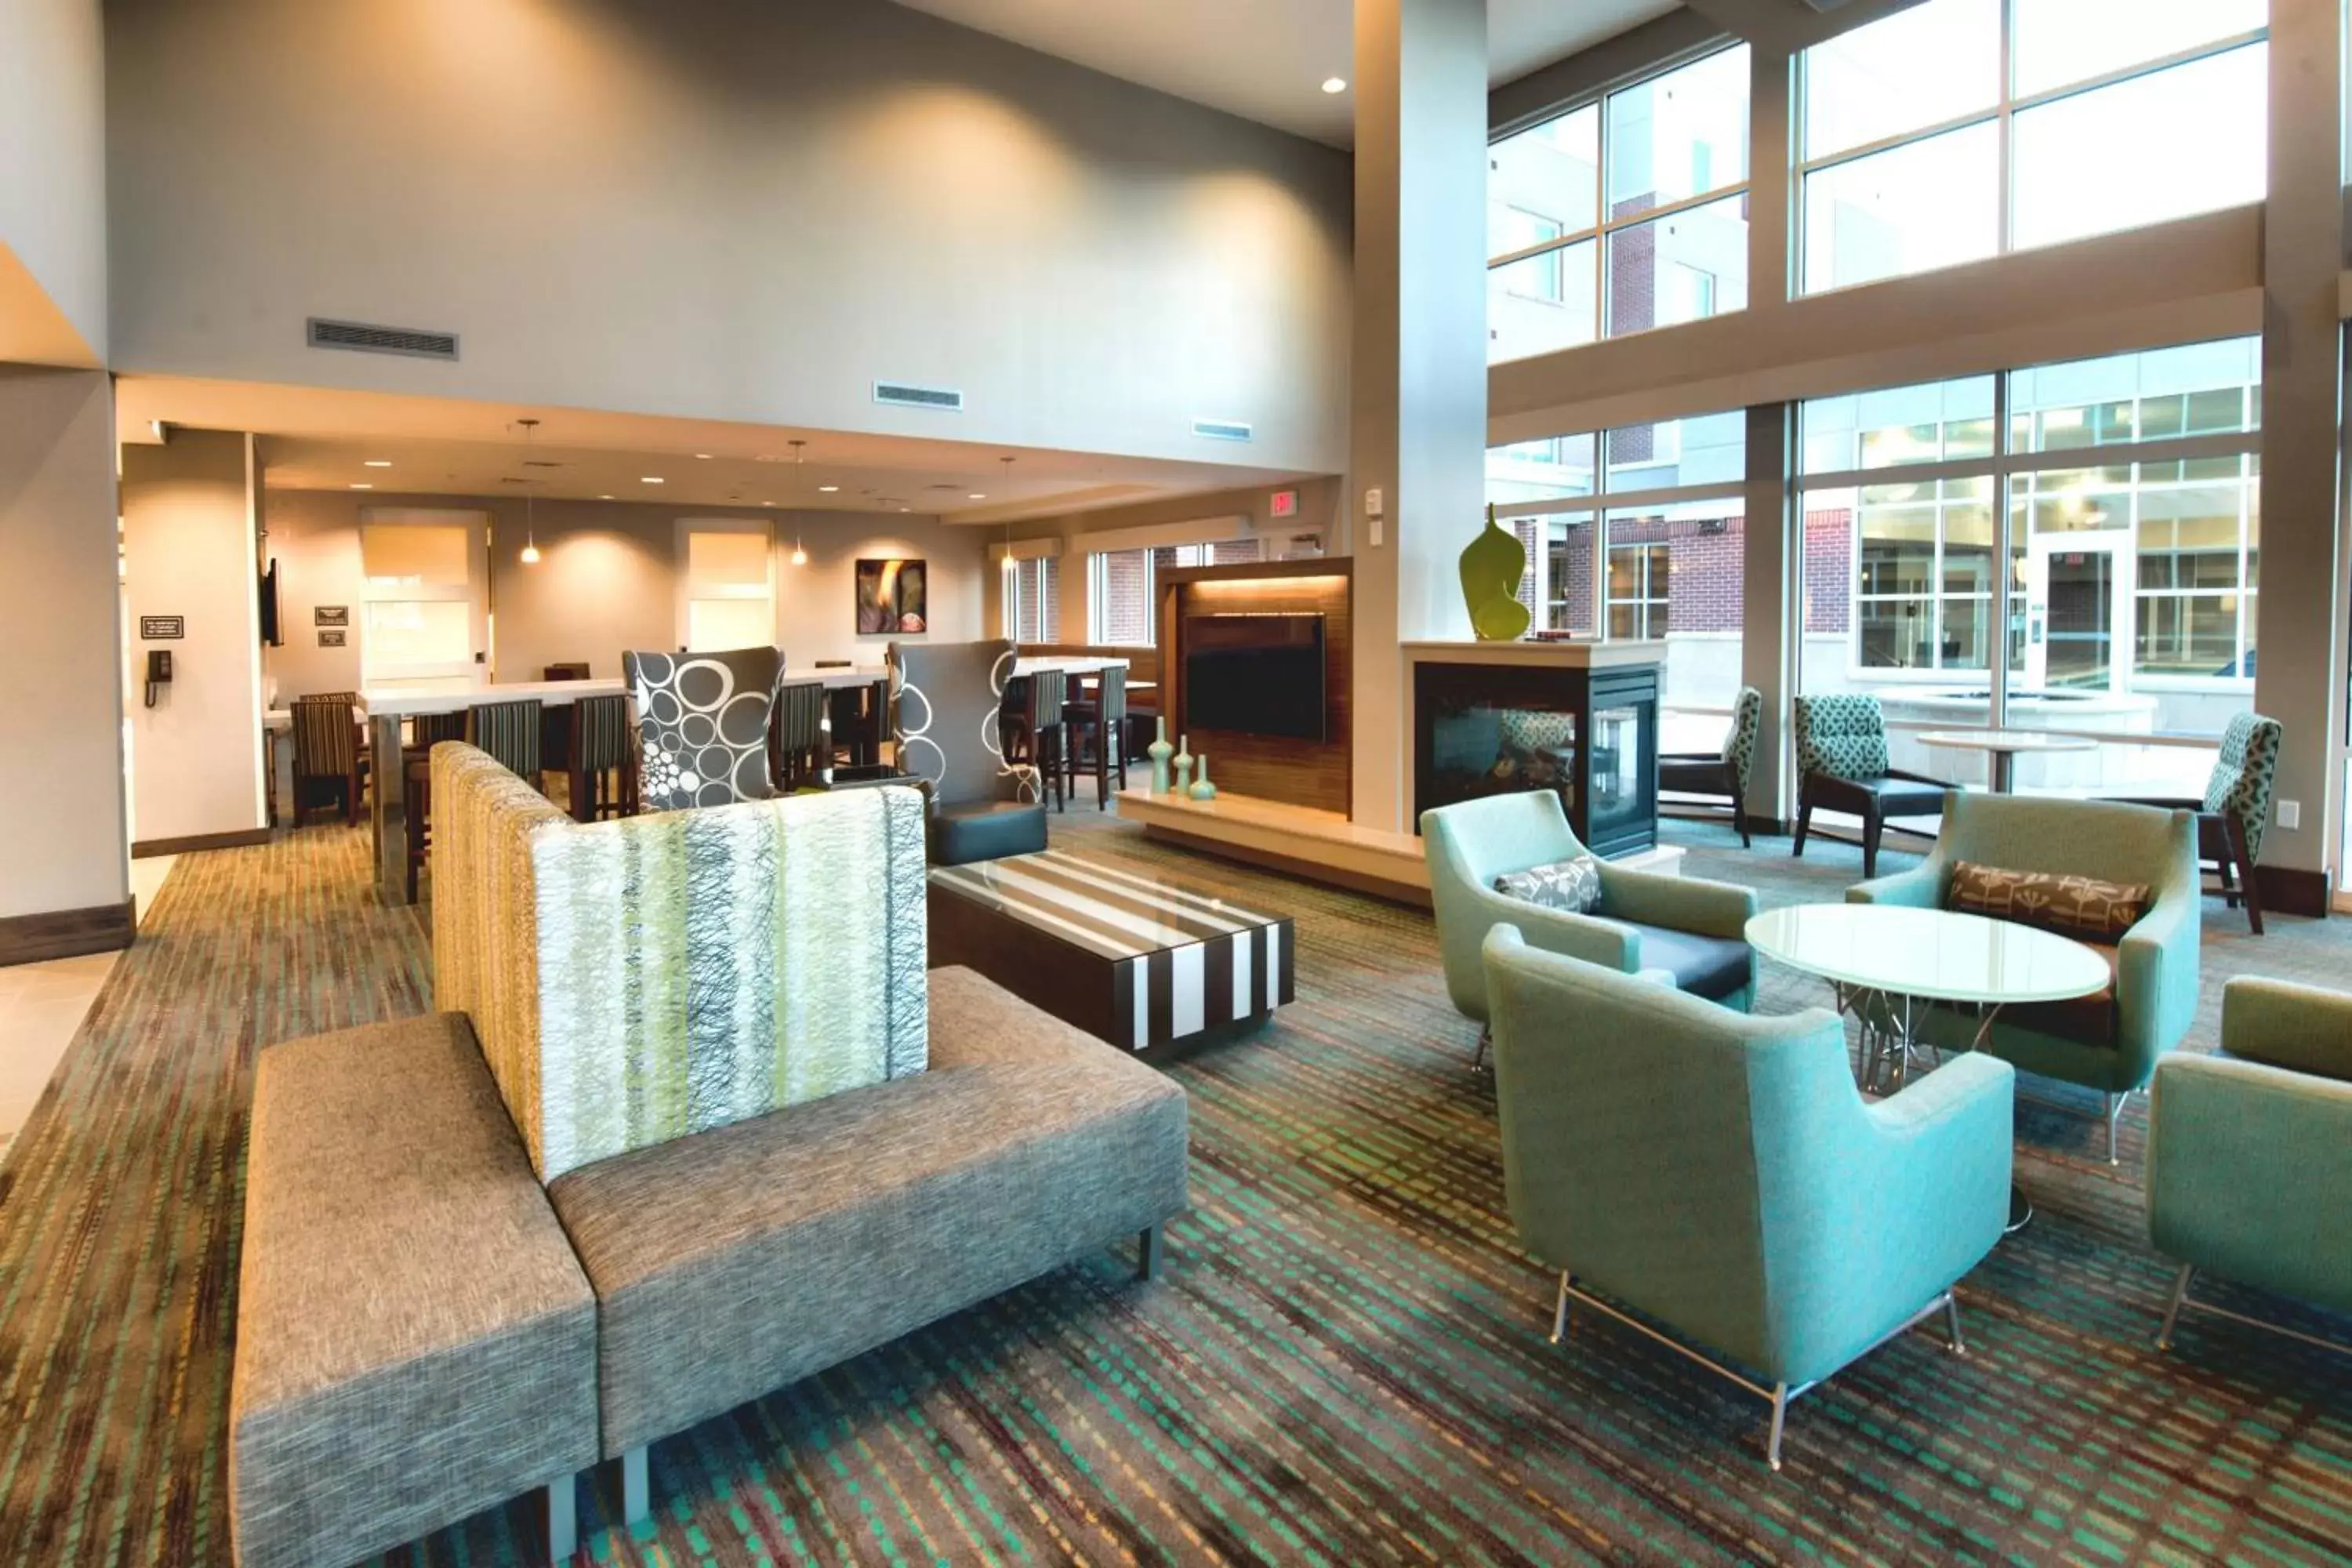 Lobby or reception in Residence Inn by Marriott Omaha Aksarben Village